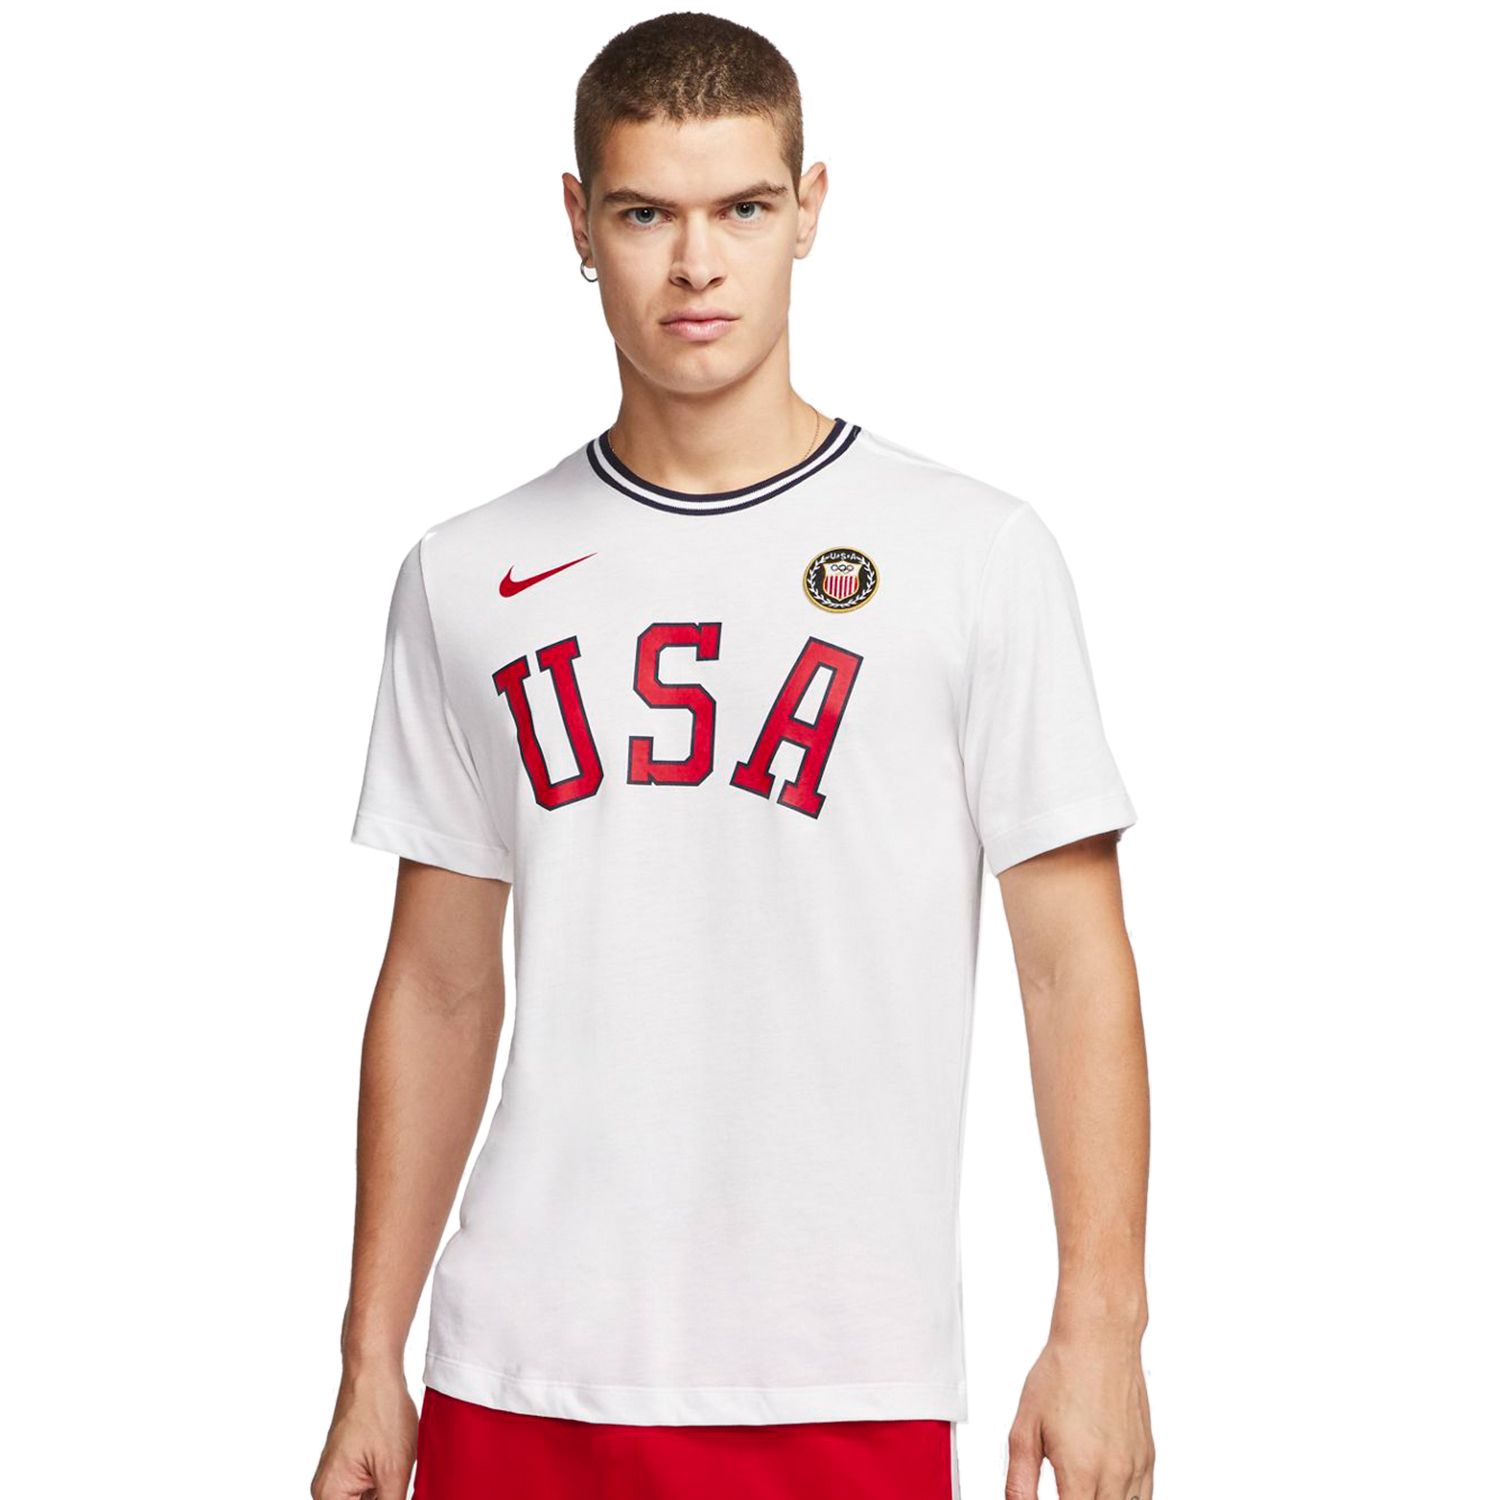 Nike T Shirt Clearance | Kohl's